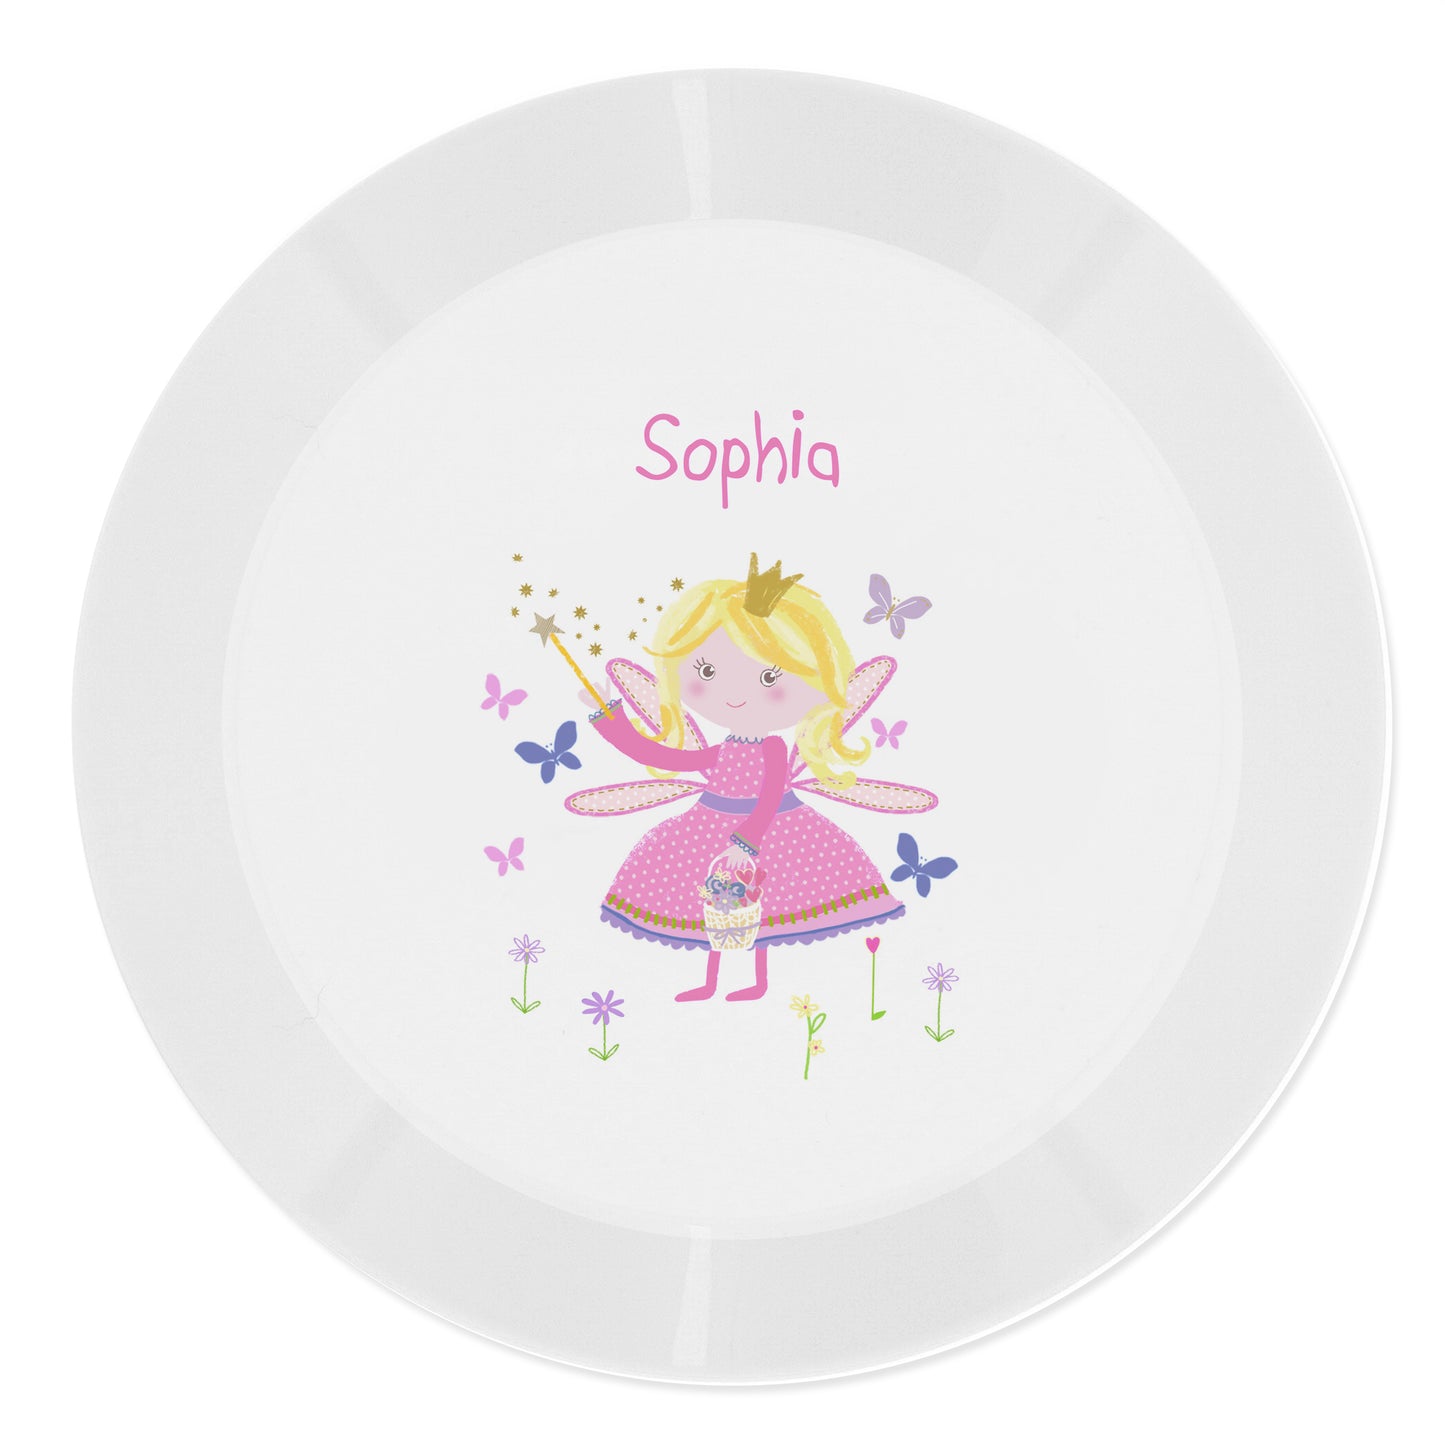 Children's Personalised Garden Fairy Plastic Plate